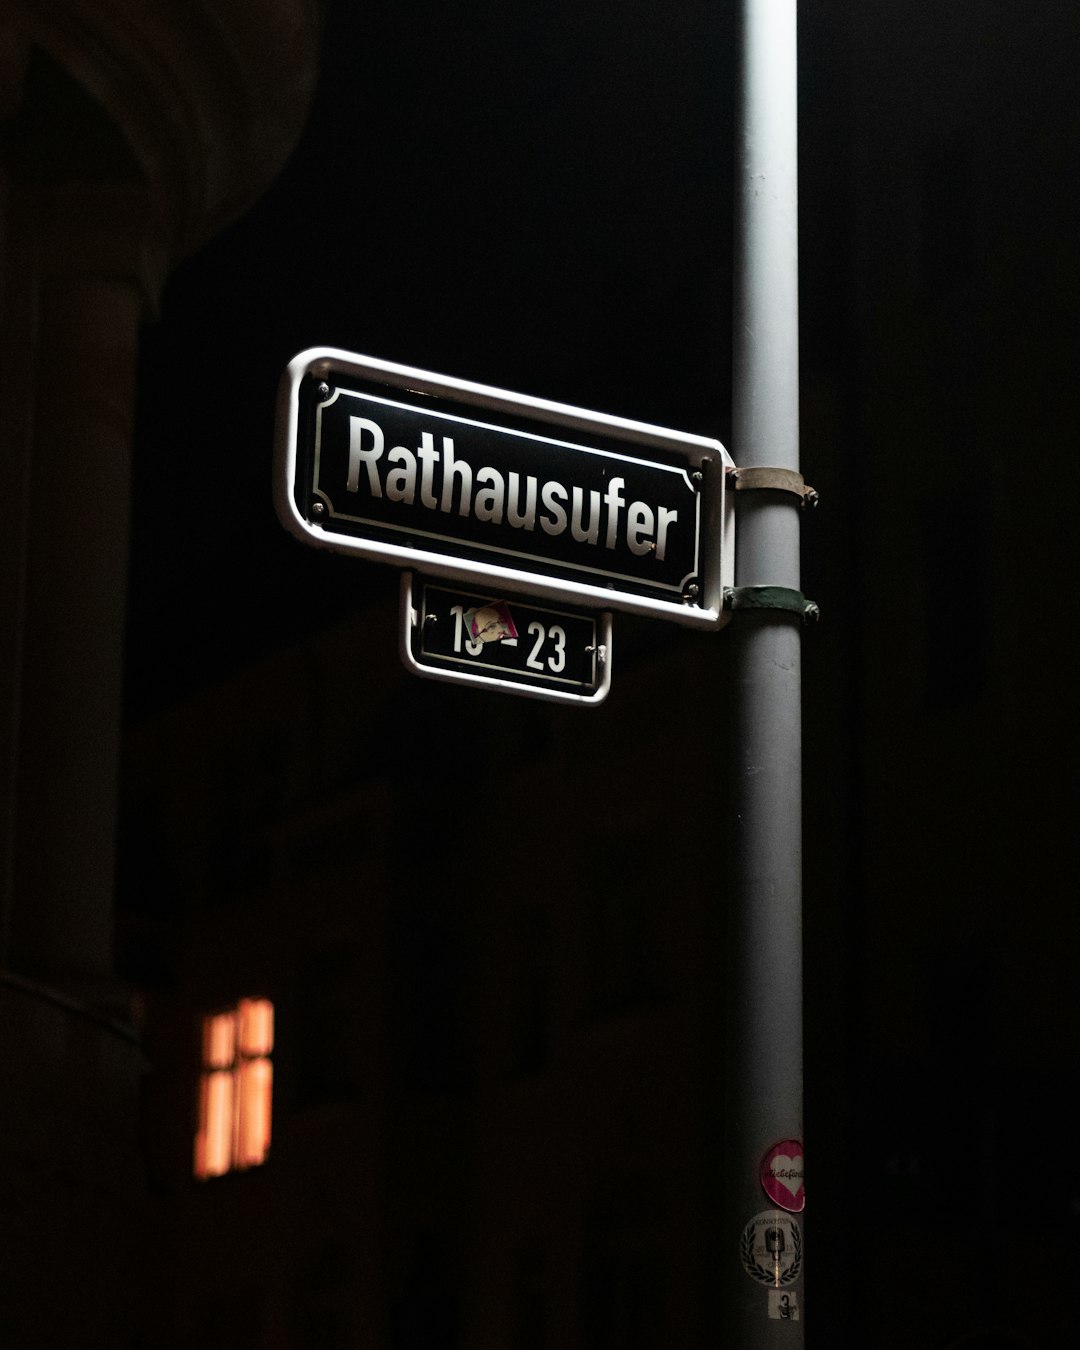 Rathausufer road sign